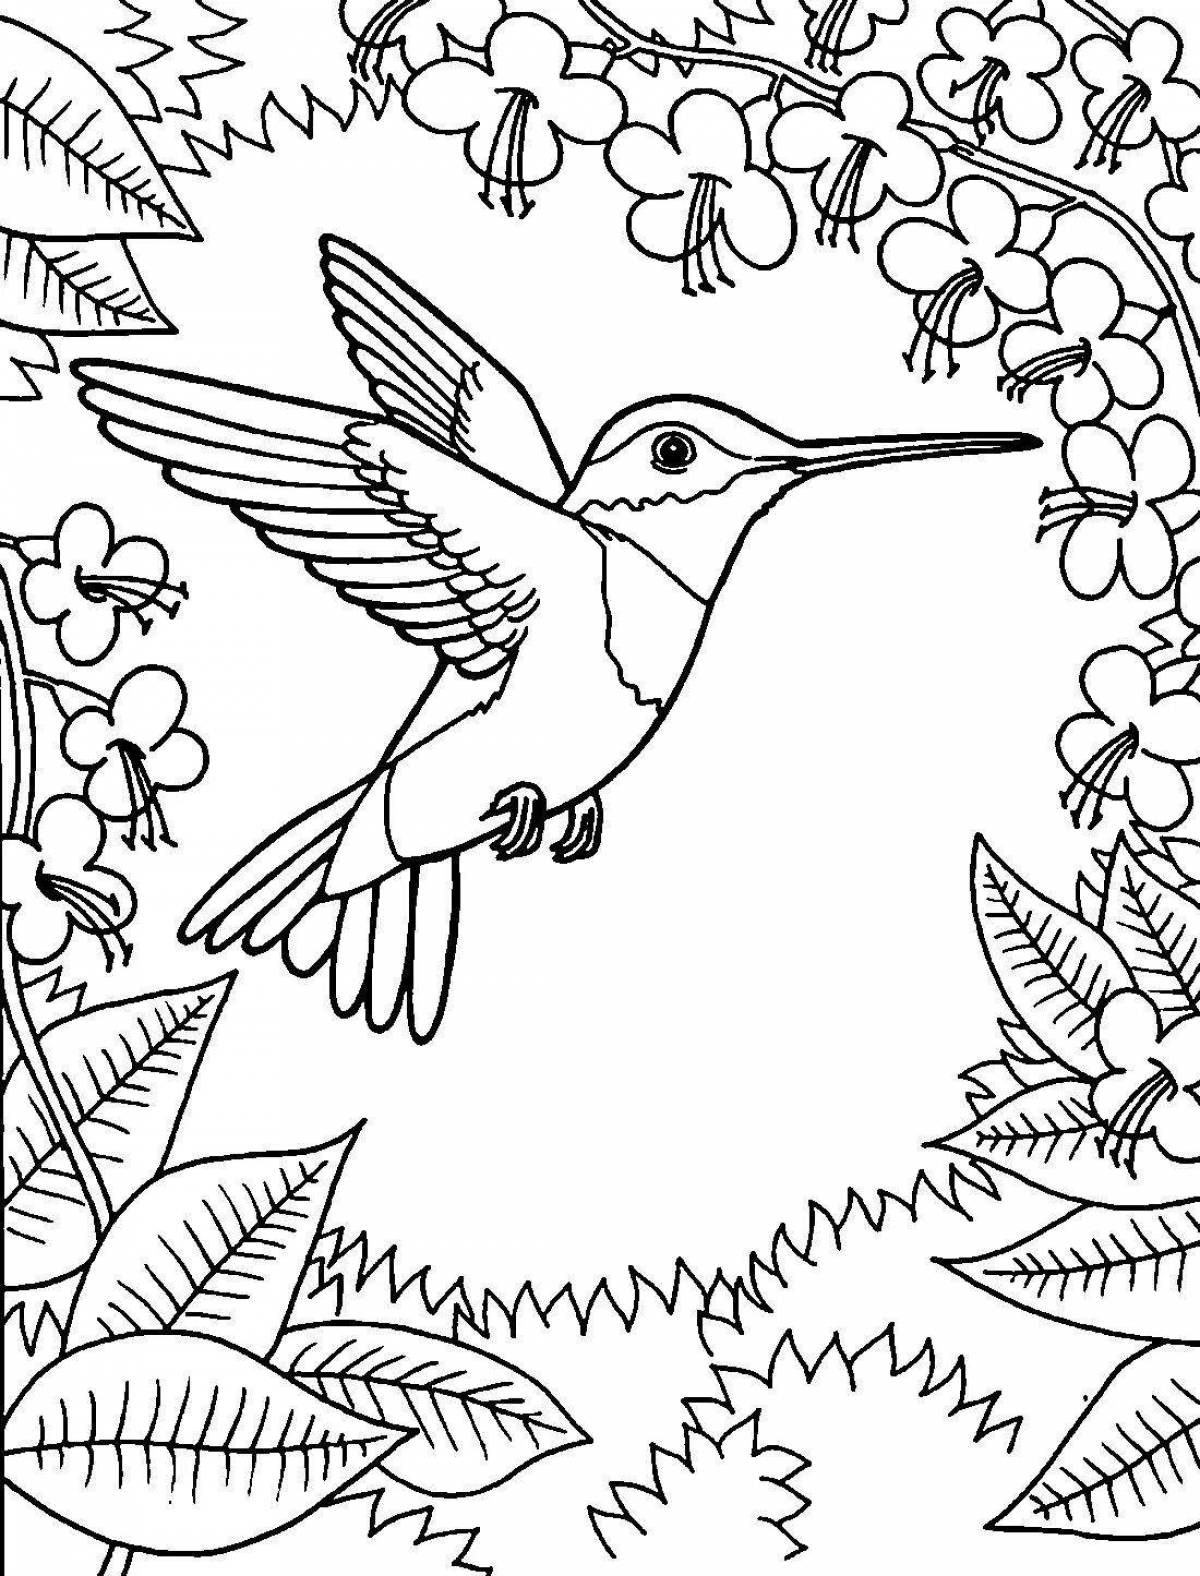 Exalted coloring page hummingbird bird